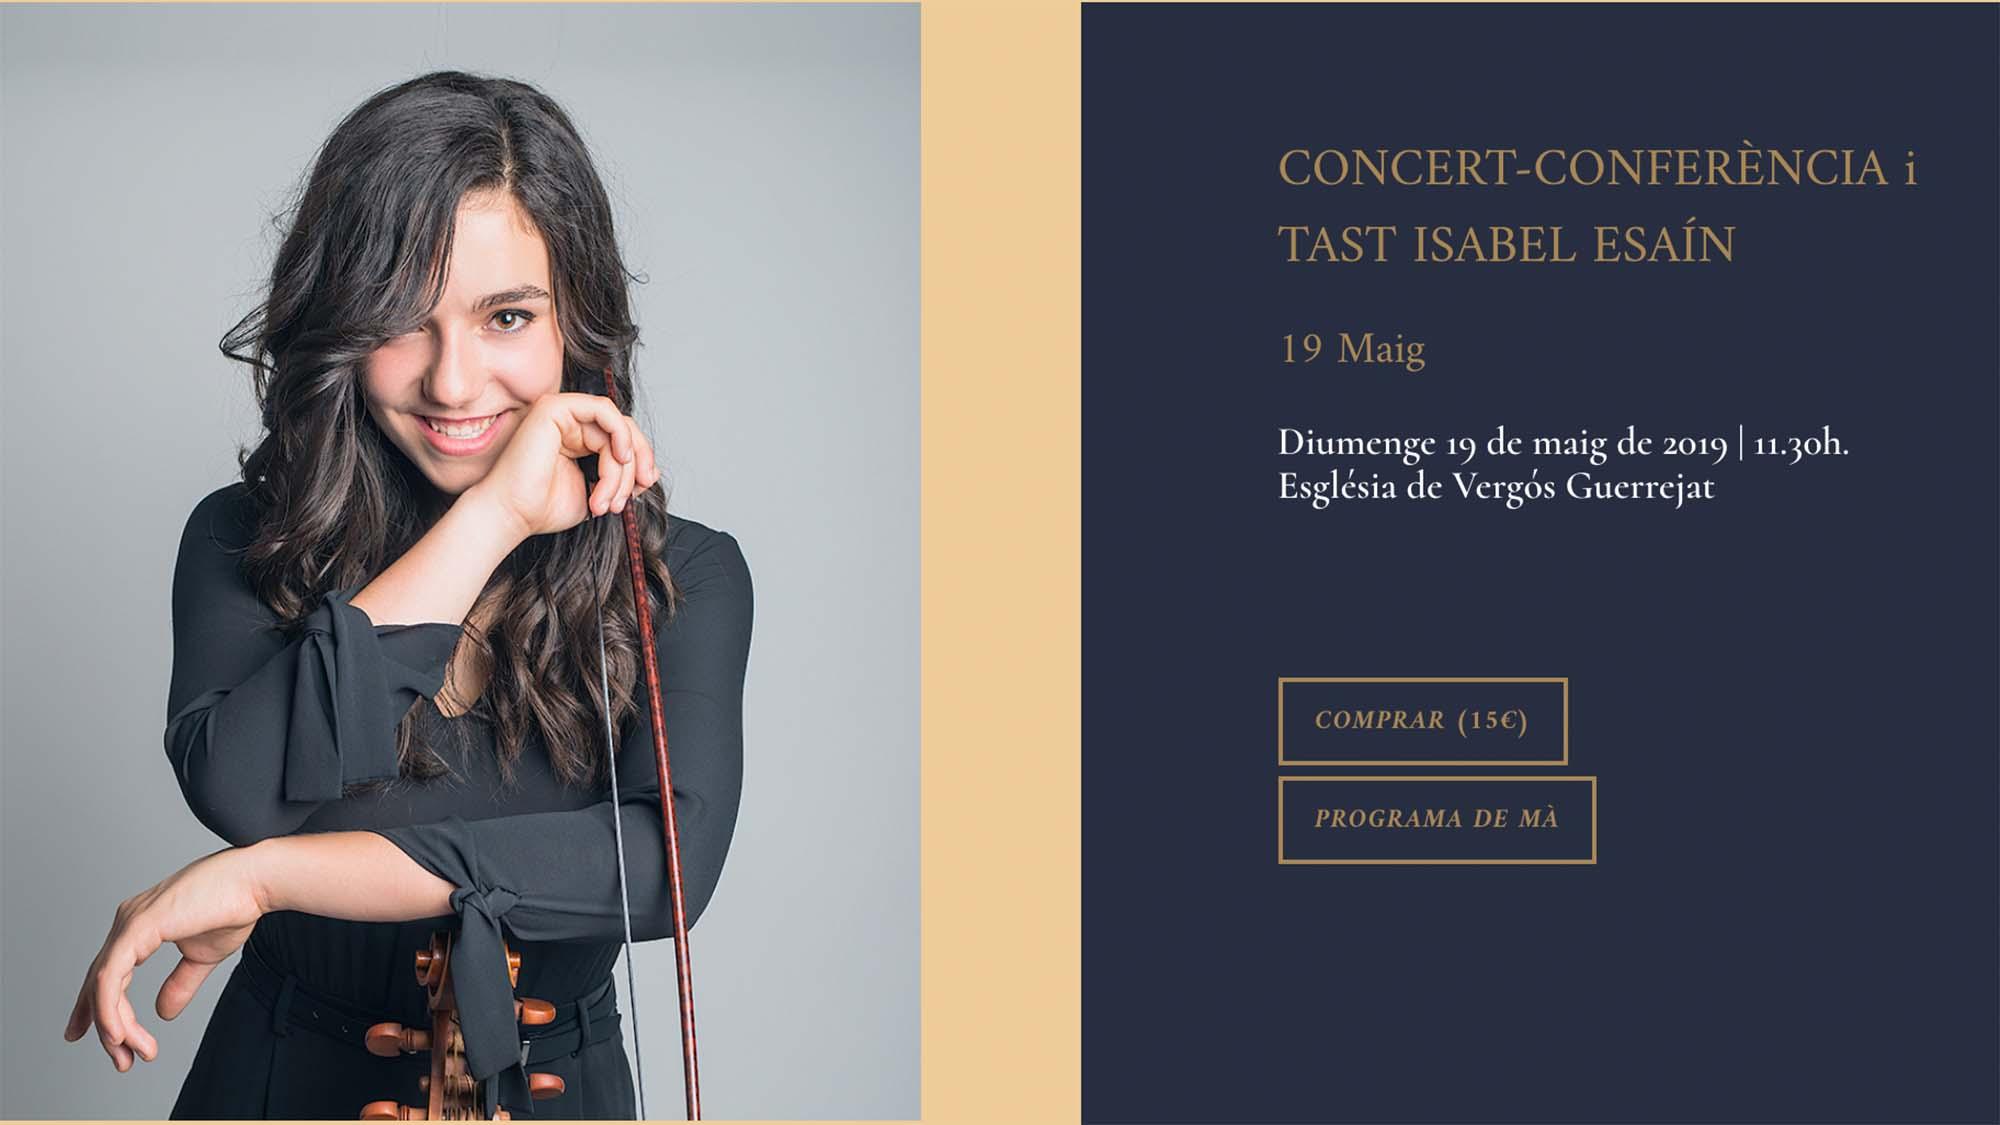 Concert-Conferència i Tast Isabel Esaín